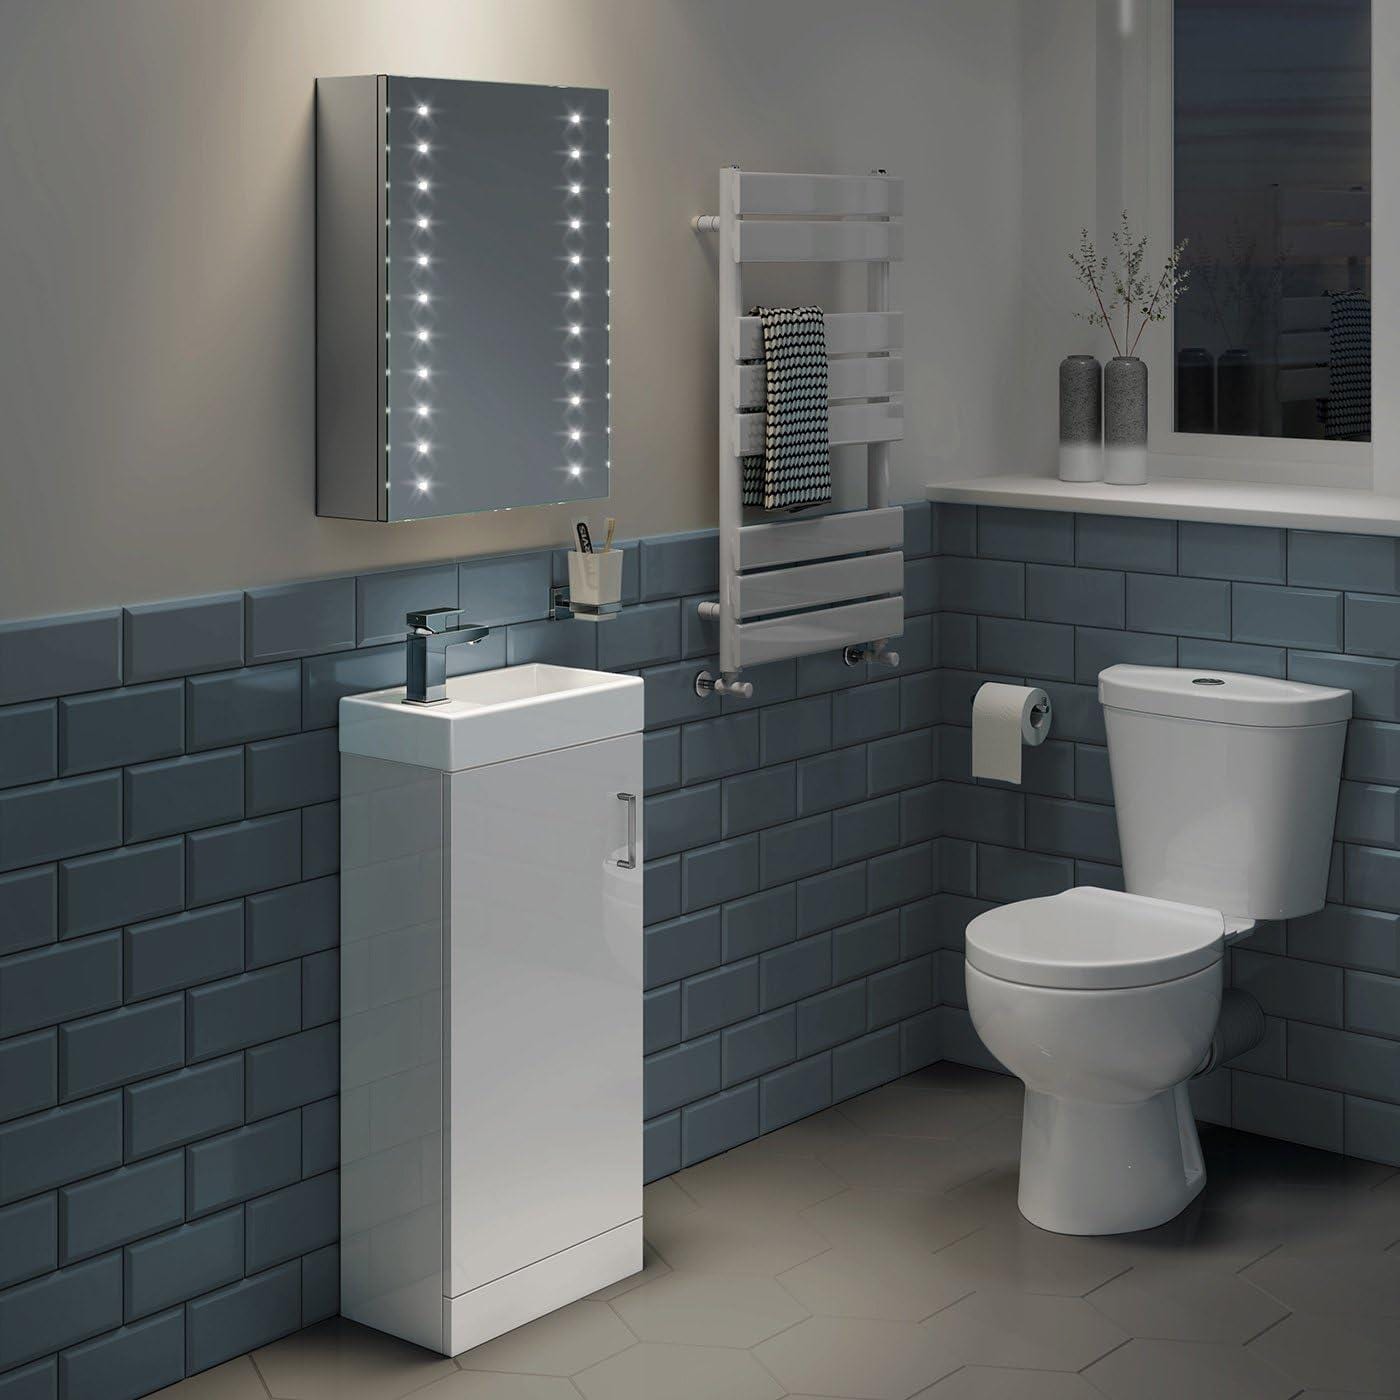 iBathUK Furniture > Mirrors iBathUK Bathroom Illuminated Mirror Cabinet with Shaver Socket 450 x 600 mm